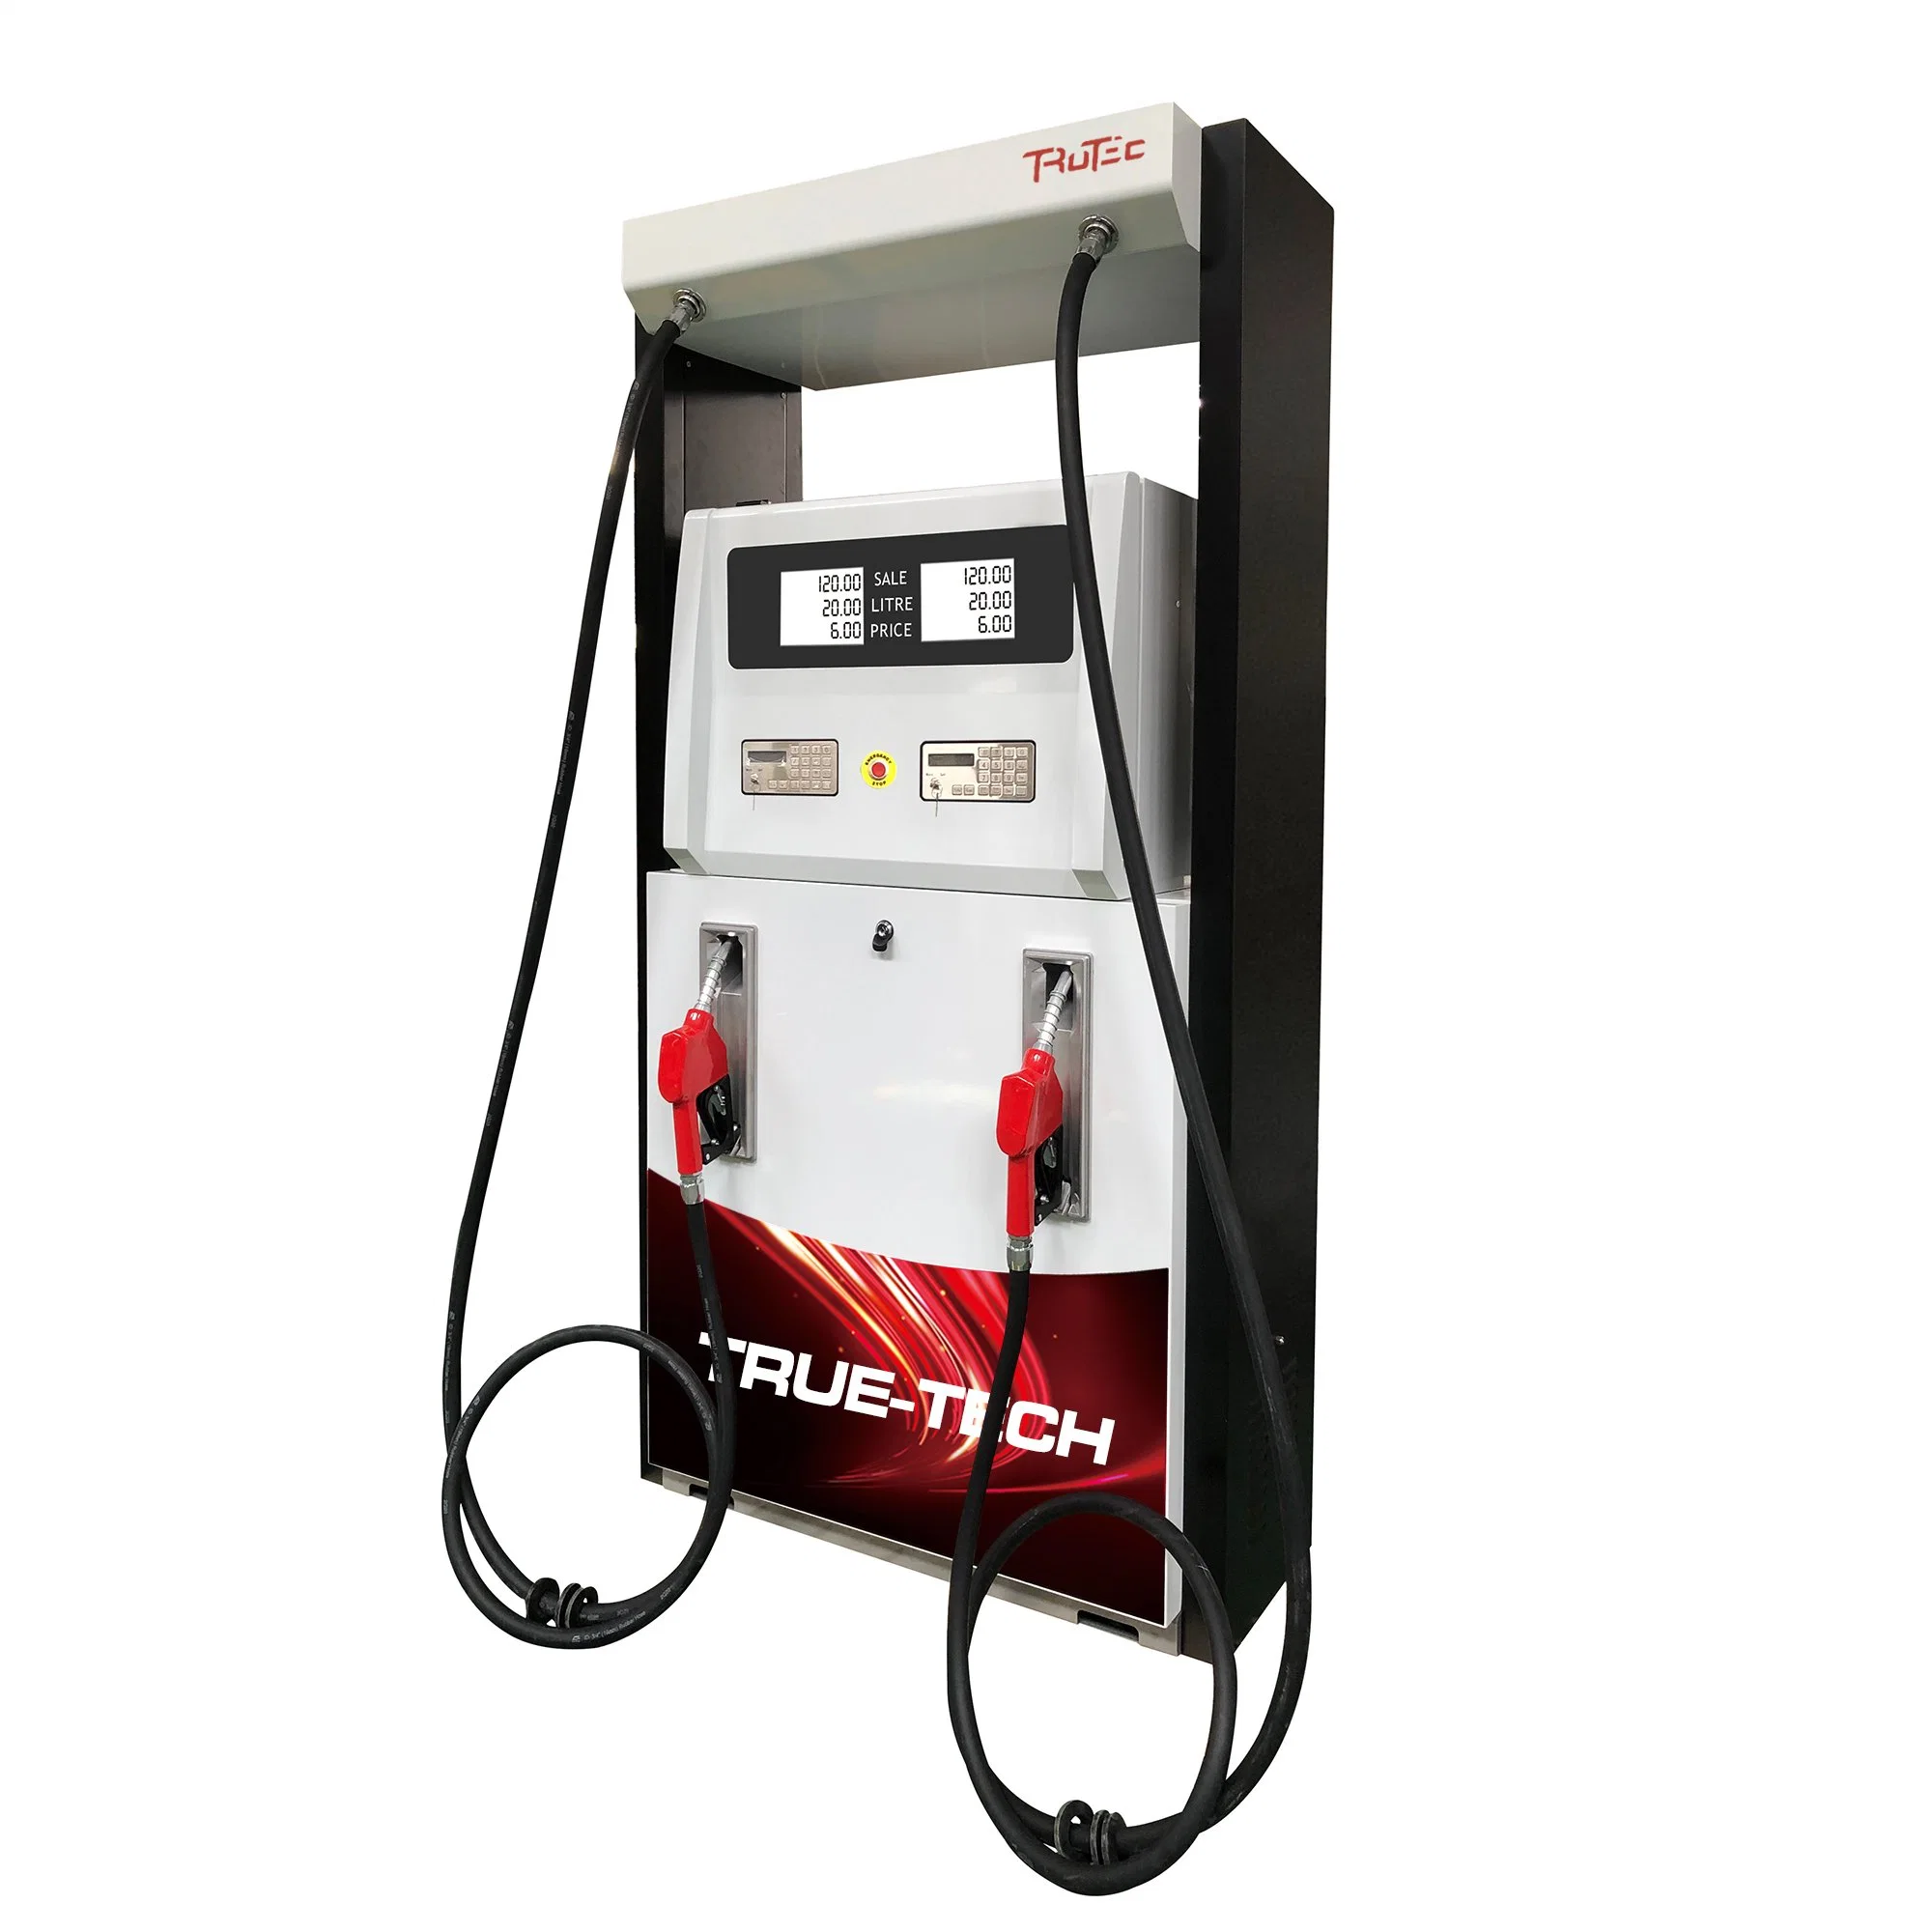 South Africa Filling Pump Gas Station Pump Fuel Dispenser Built in Tank for Fuel Station Management System China Provide